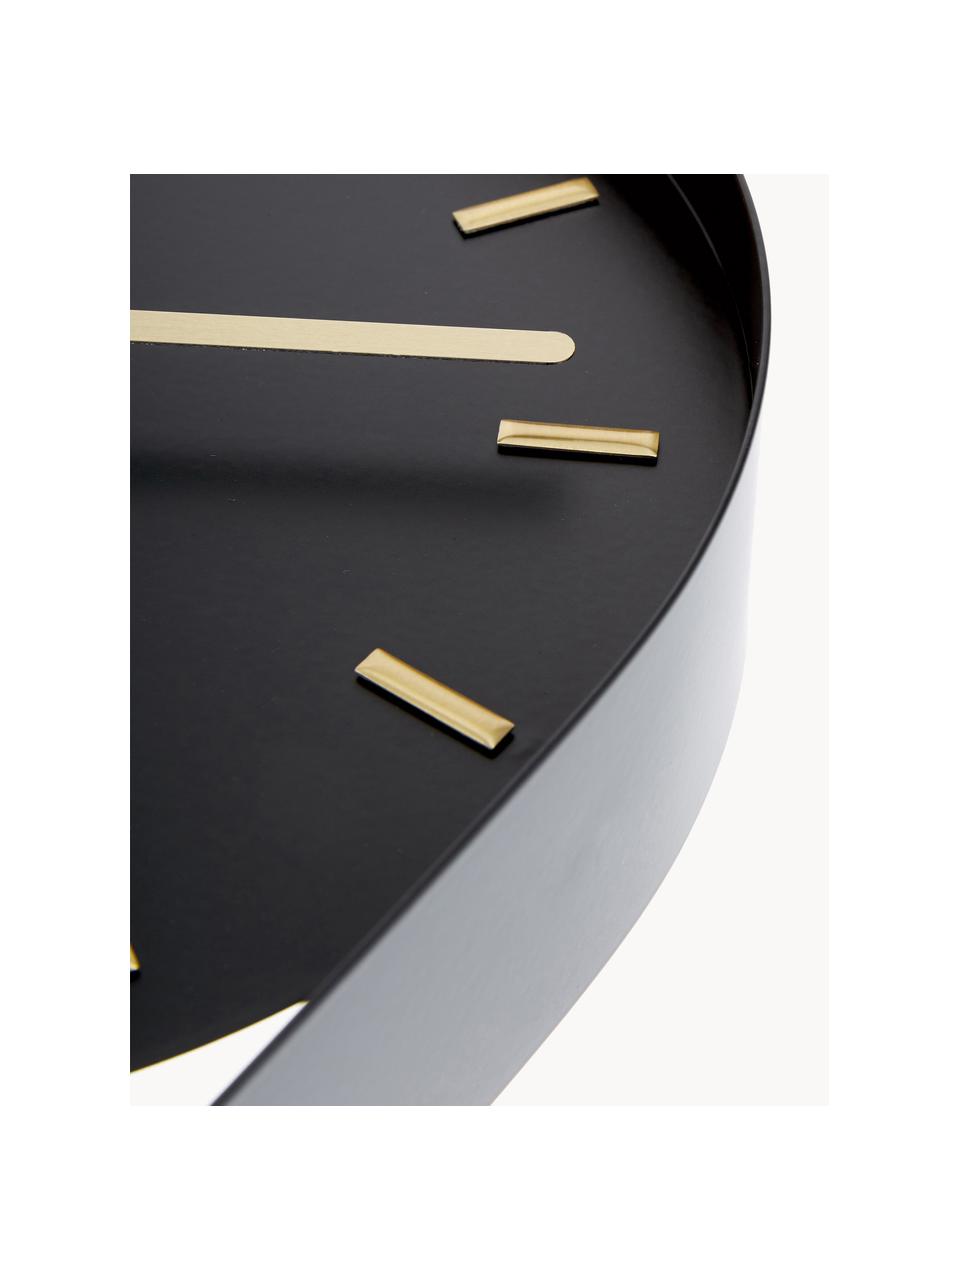 Reloj de pared Charm, Metal recubierto, Negro, An 20 x Al 50 cm